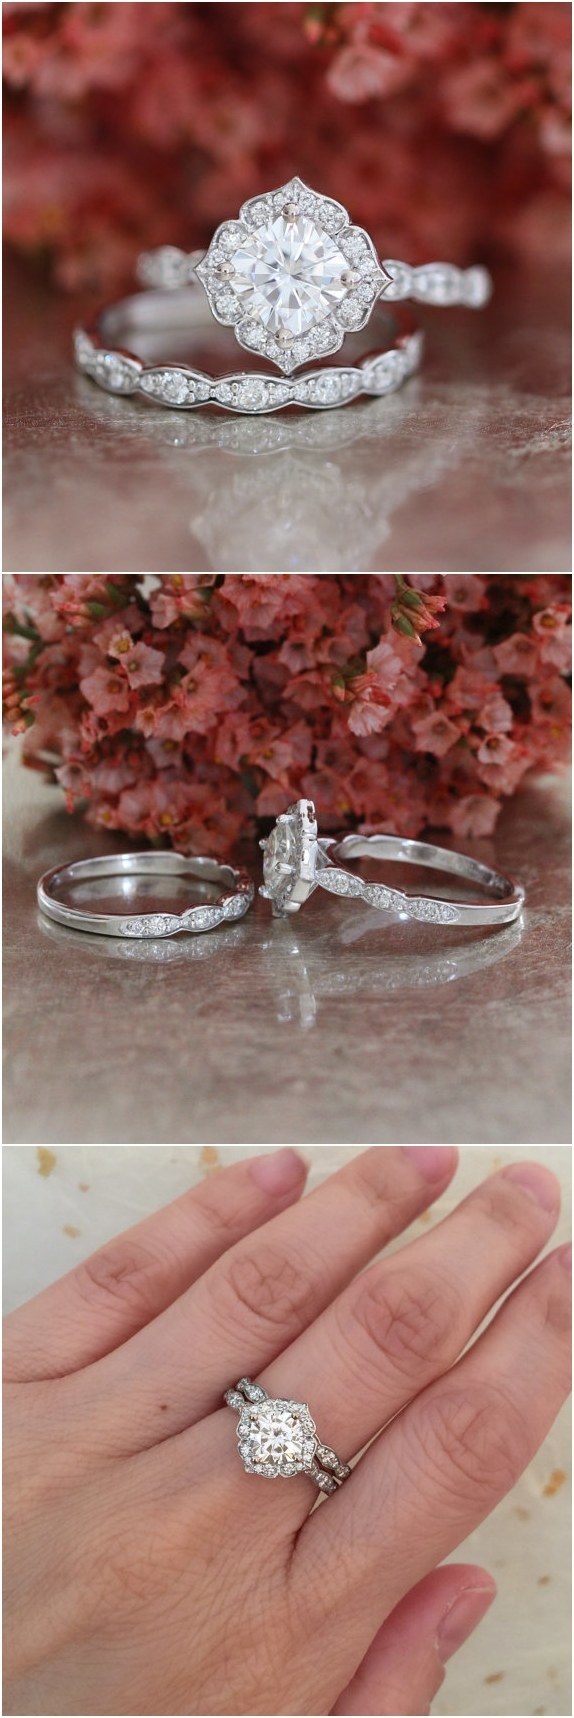 1505204554 forever one moissanite engagement ring and scalloped diamond wedding band bridal set 14k white gold 6x6mm cushion mini vintage floral ring